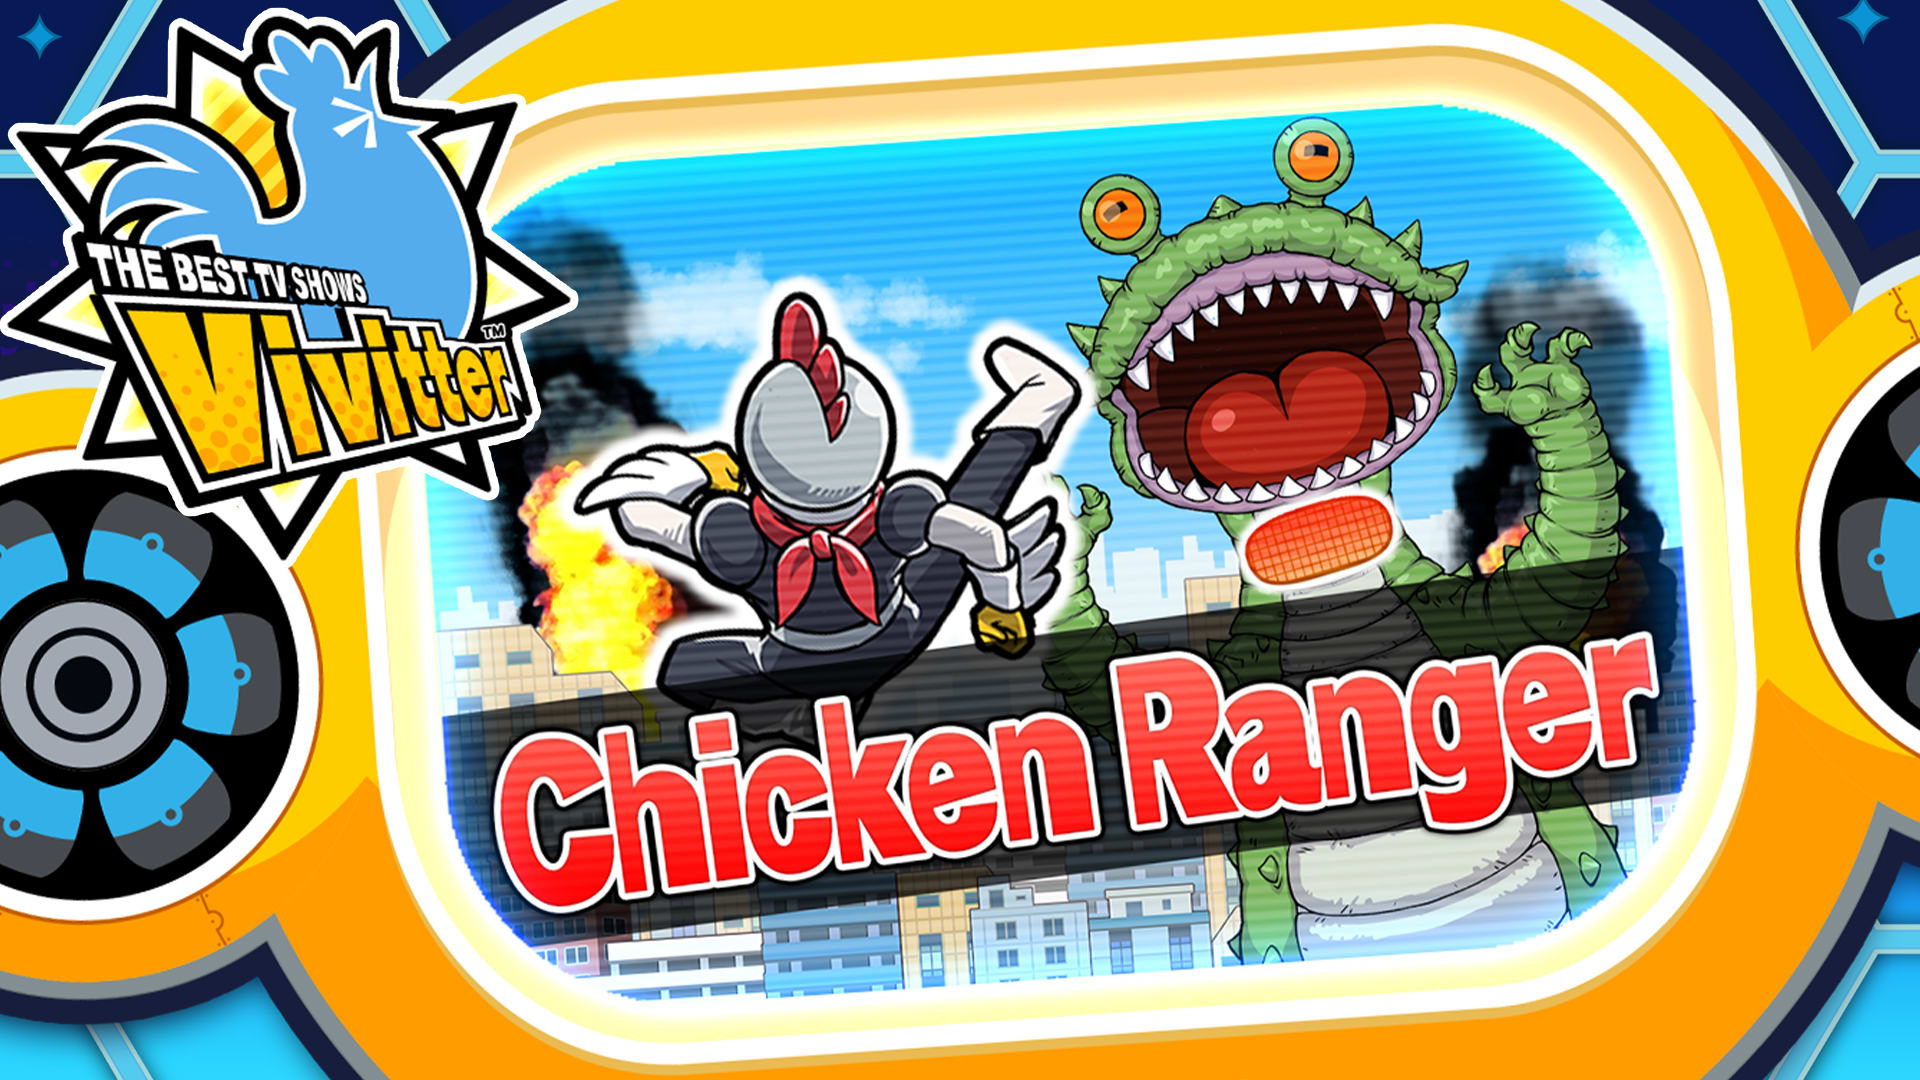 Additional mini-game "Chicken Ranger"